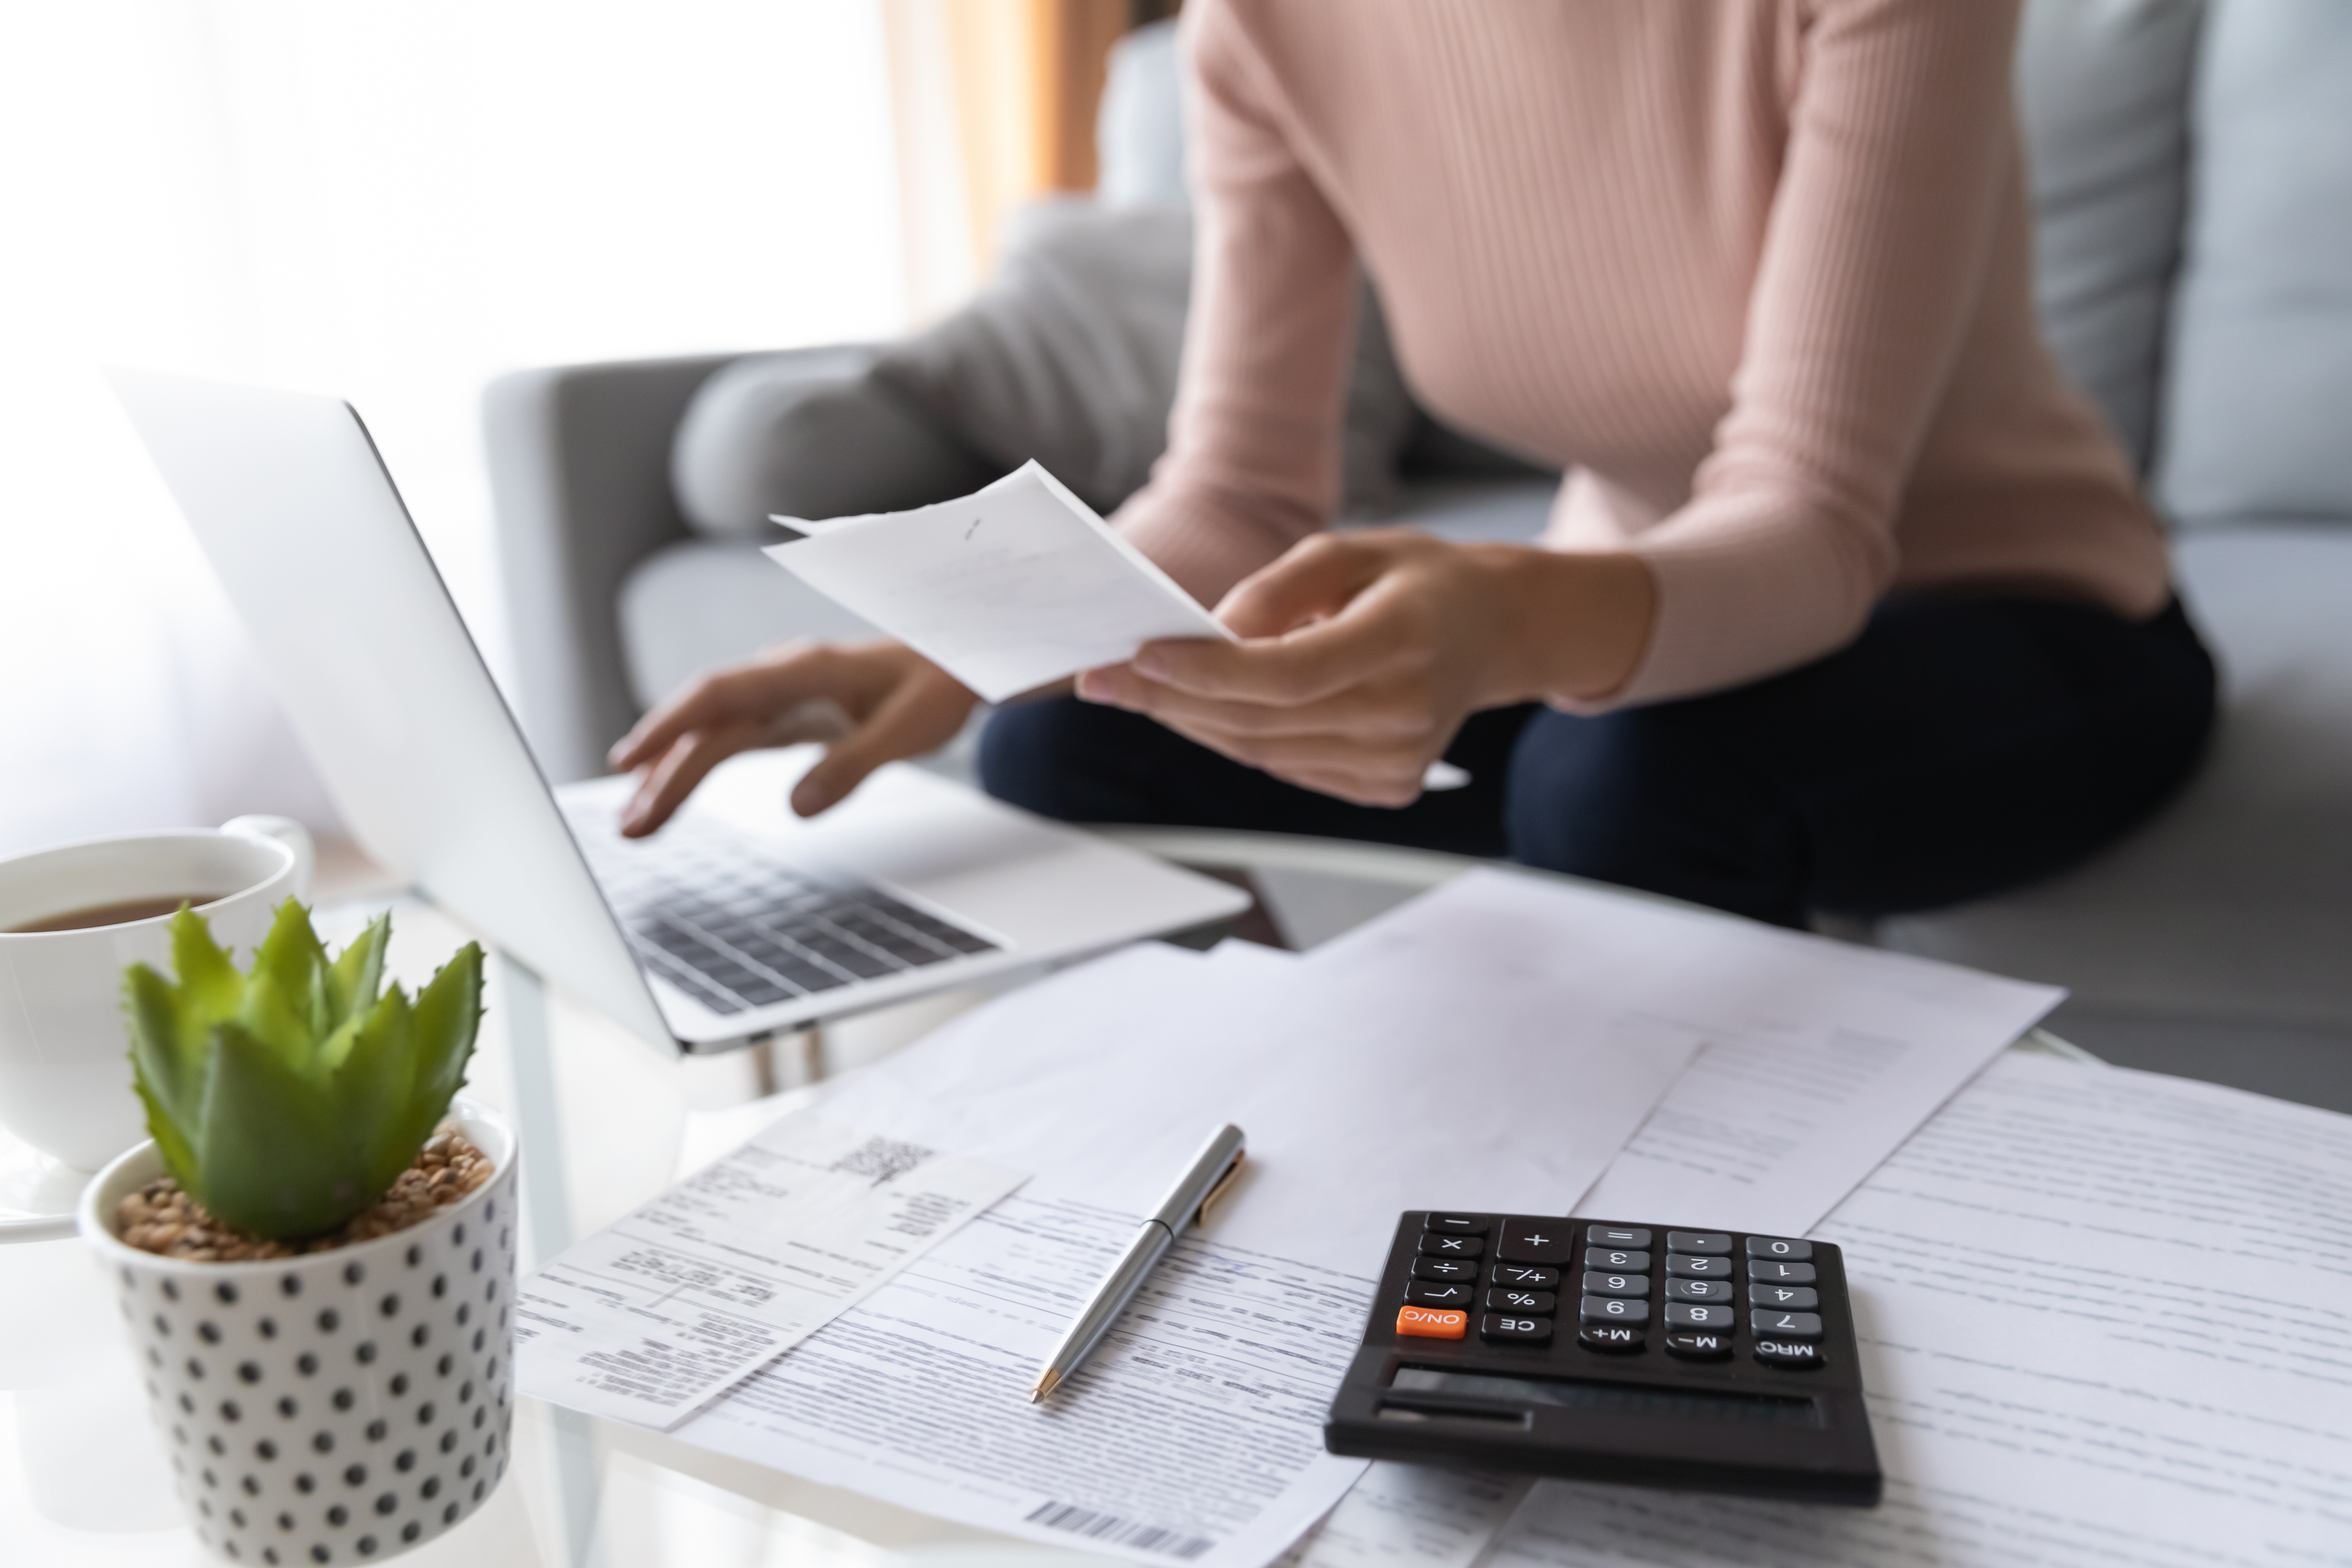 A woman calculating her finances | Source: Shutterstock